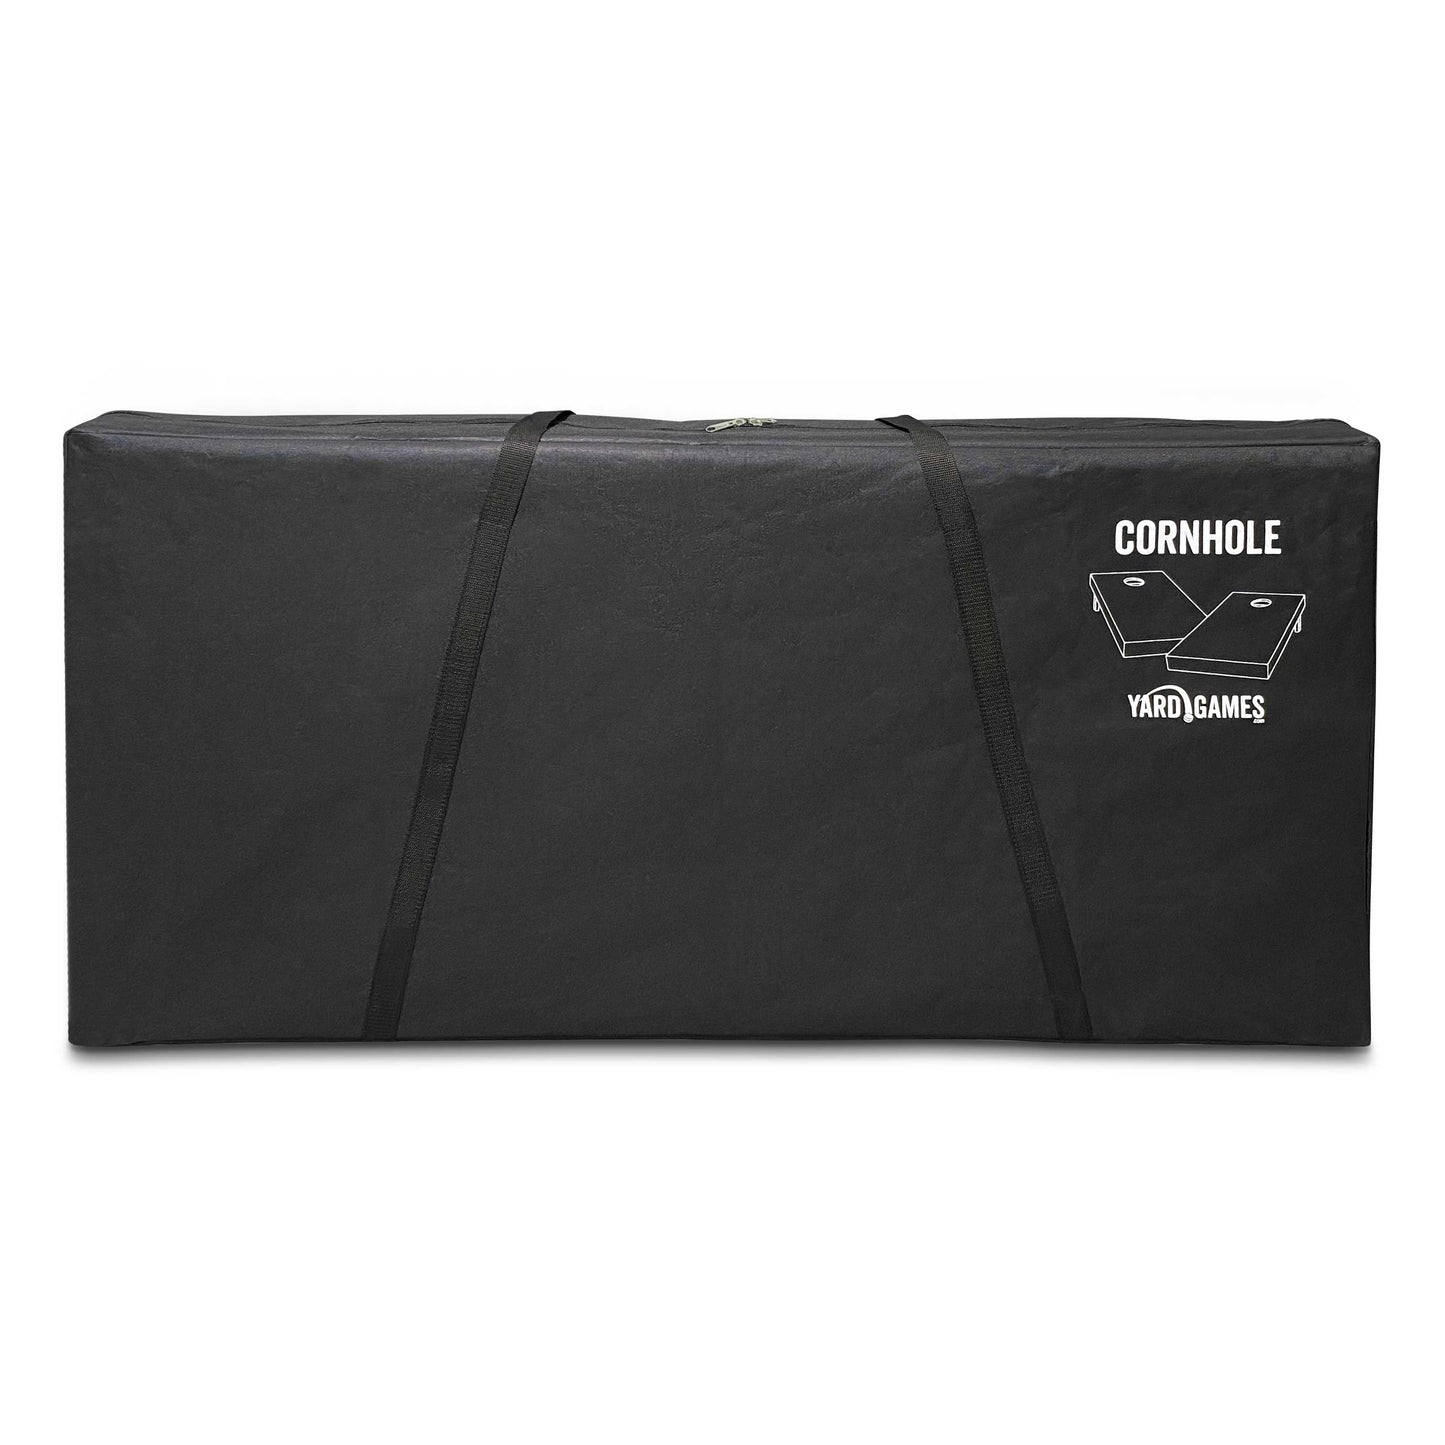 Customized Hot Rod Cornhole Boards